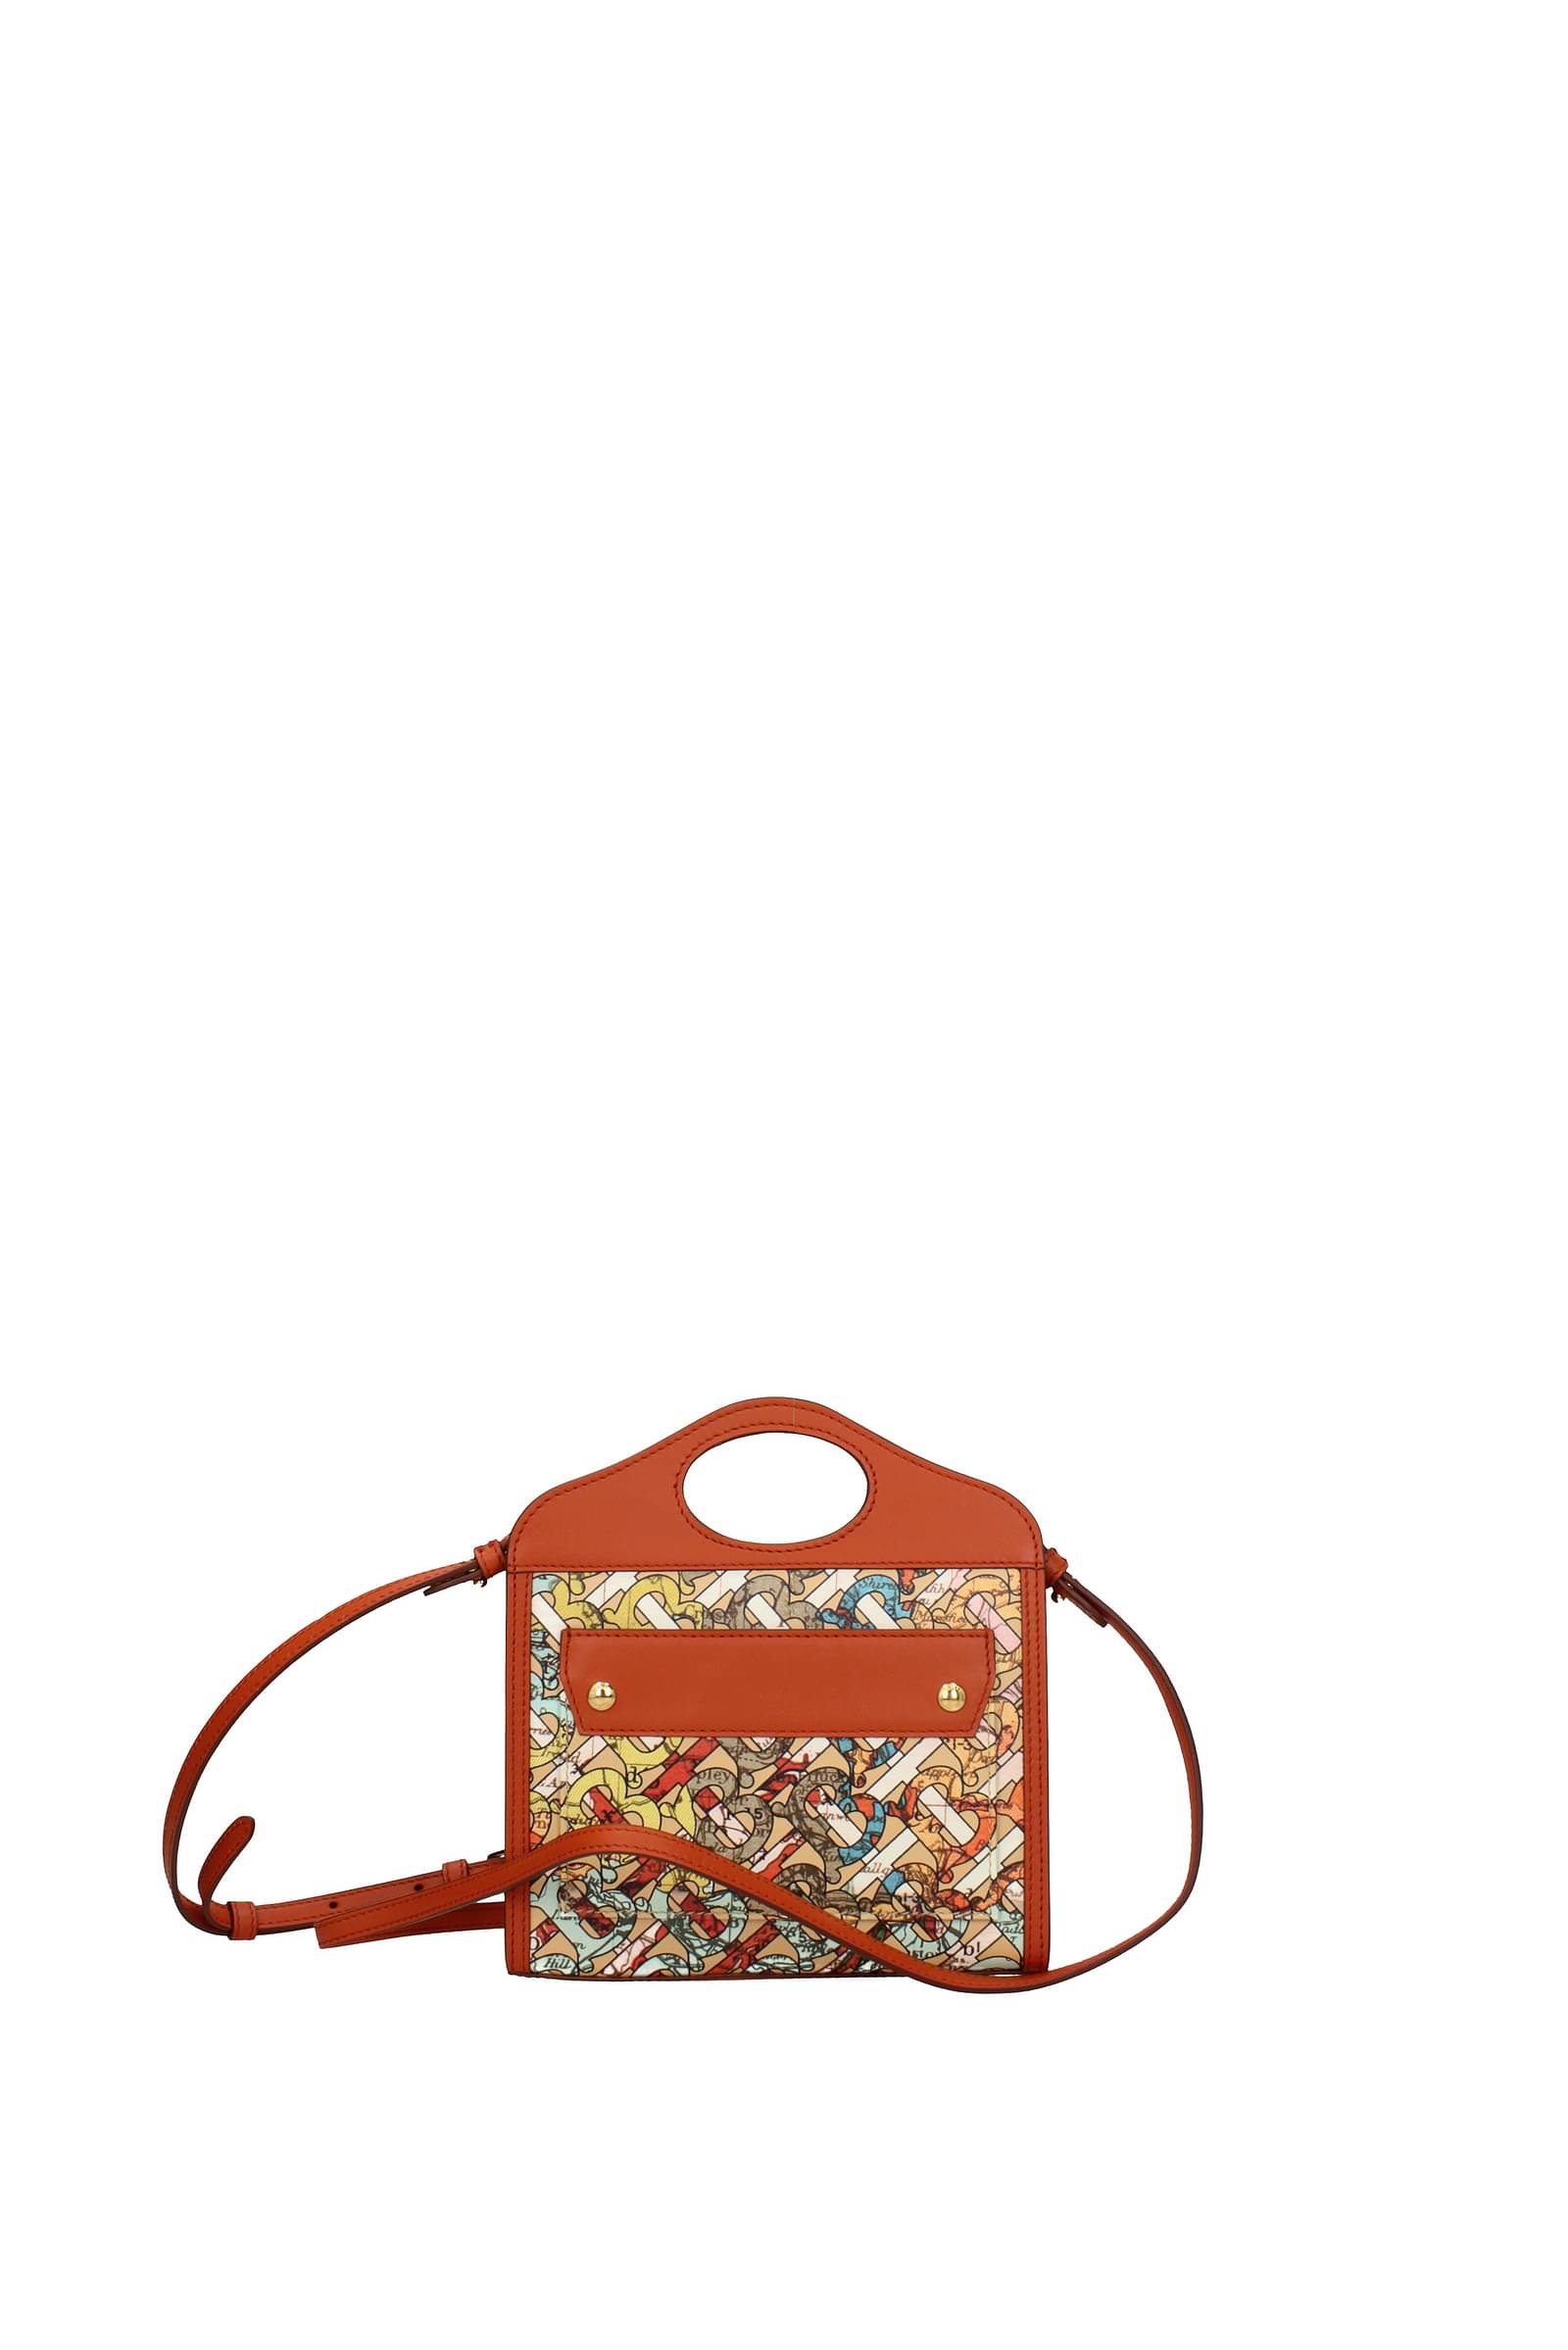 Burberry Handbags – Instant Finds